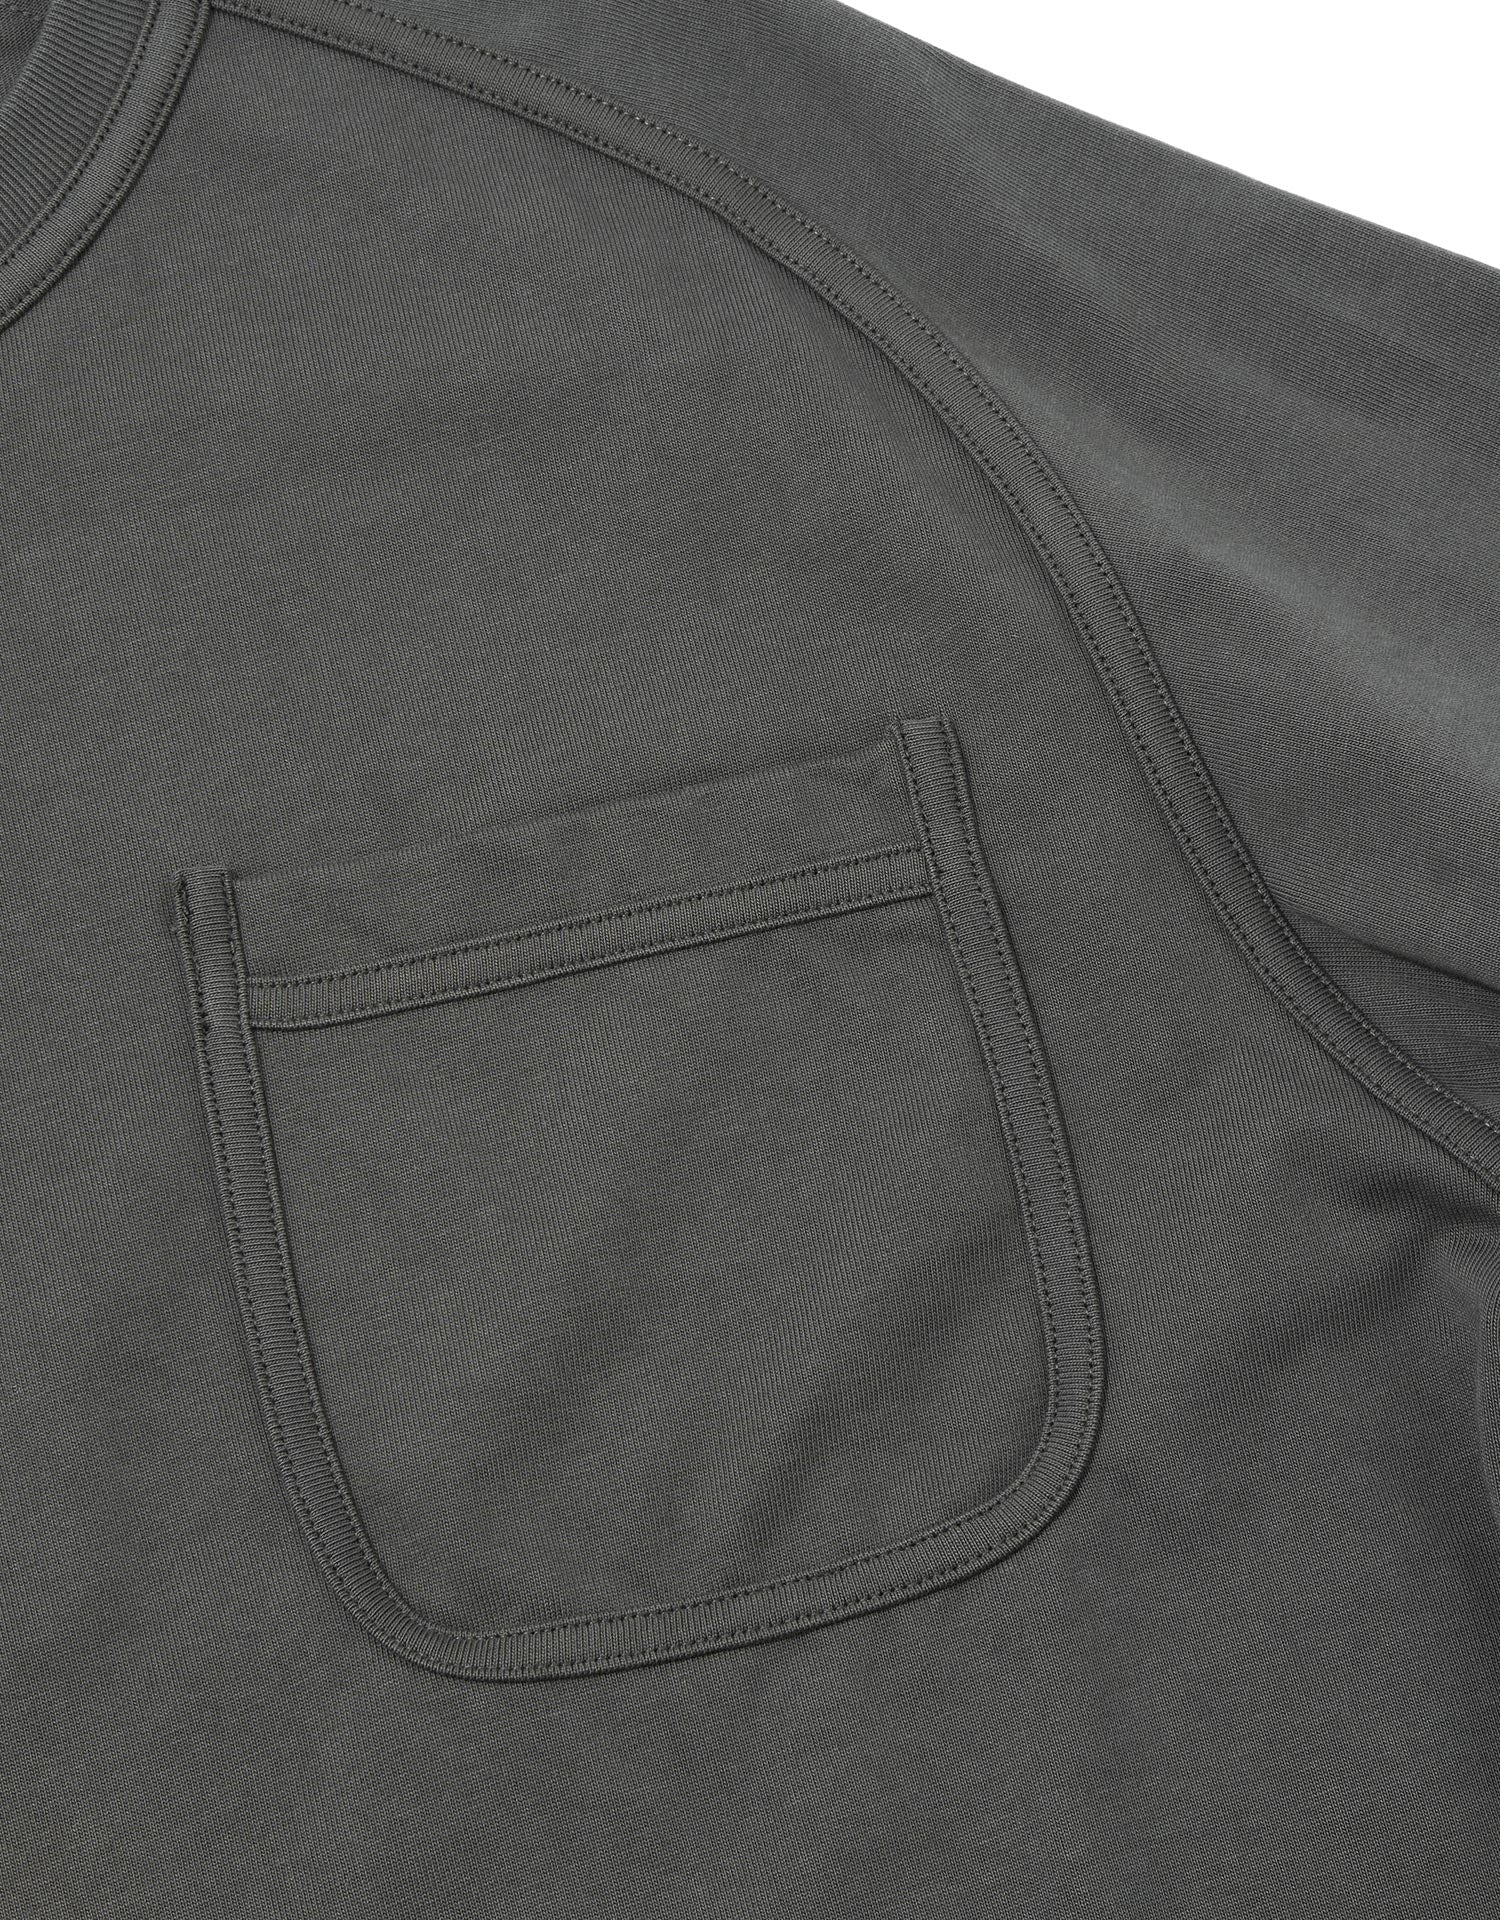 TopBasics Double Stitched Seam T-Shirt